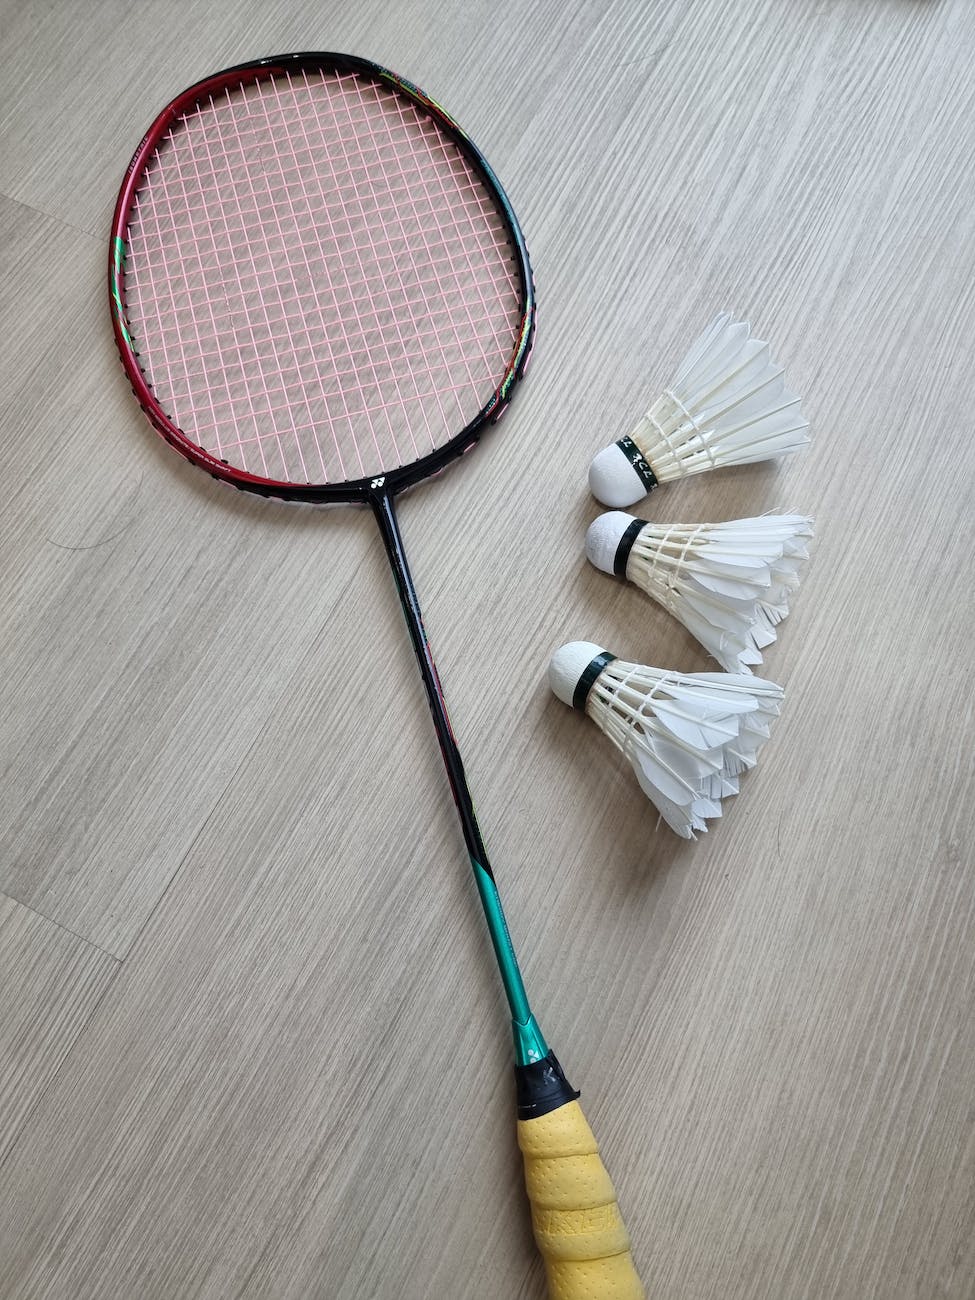 photo of a badminton racket near shuttlecocks